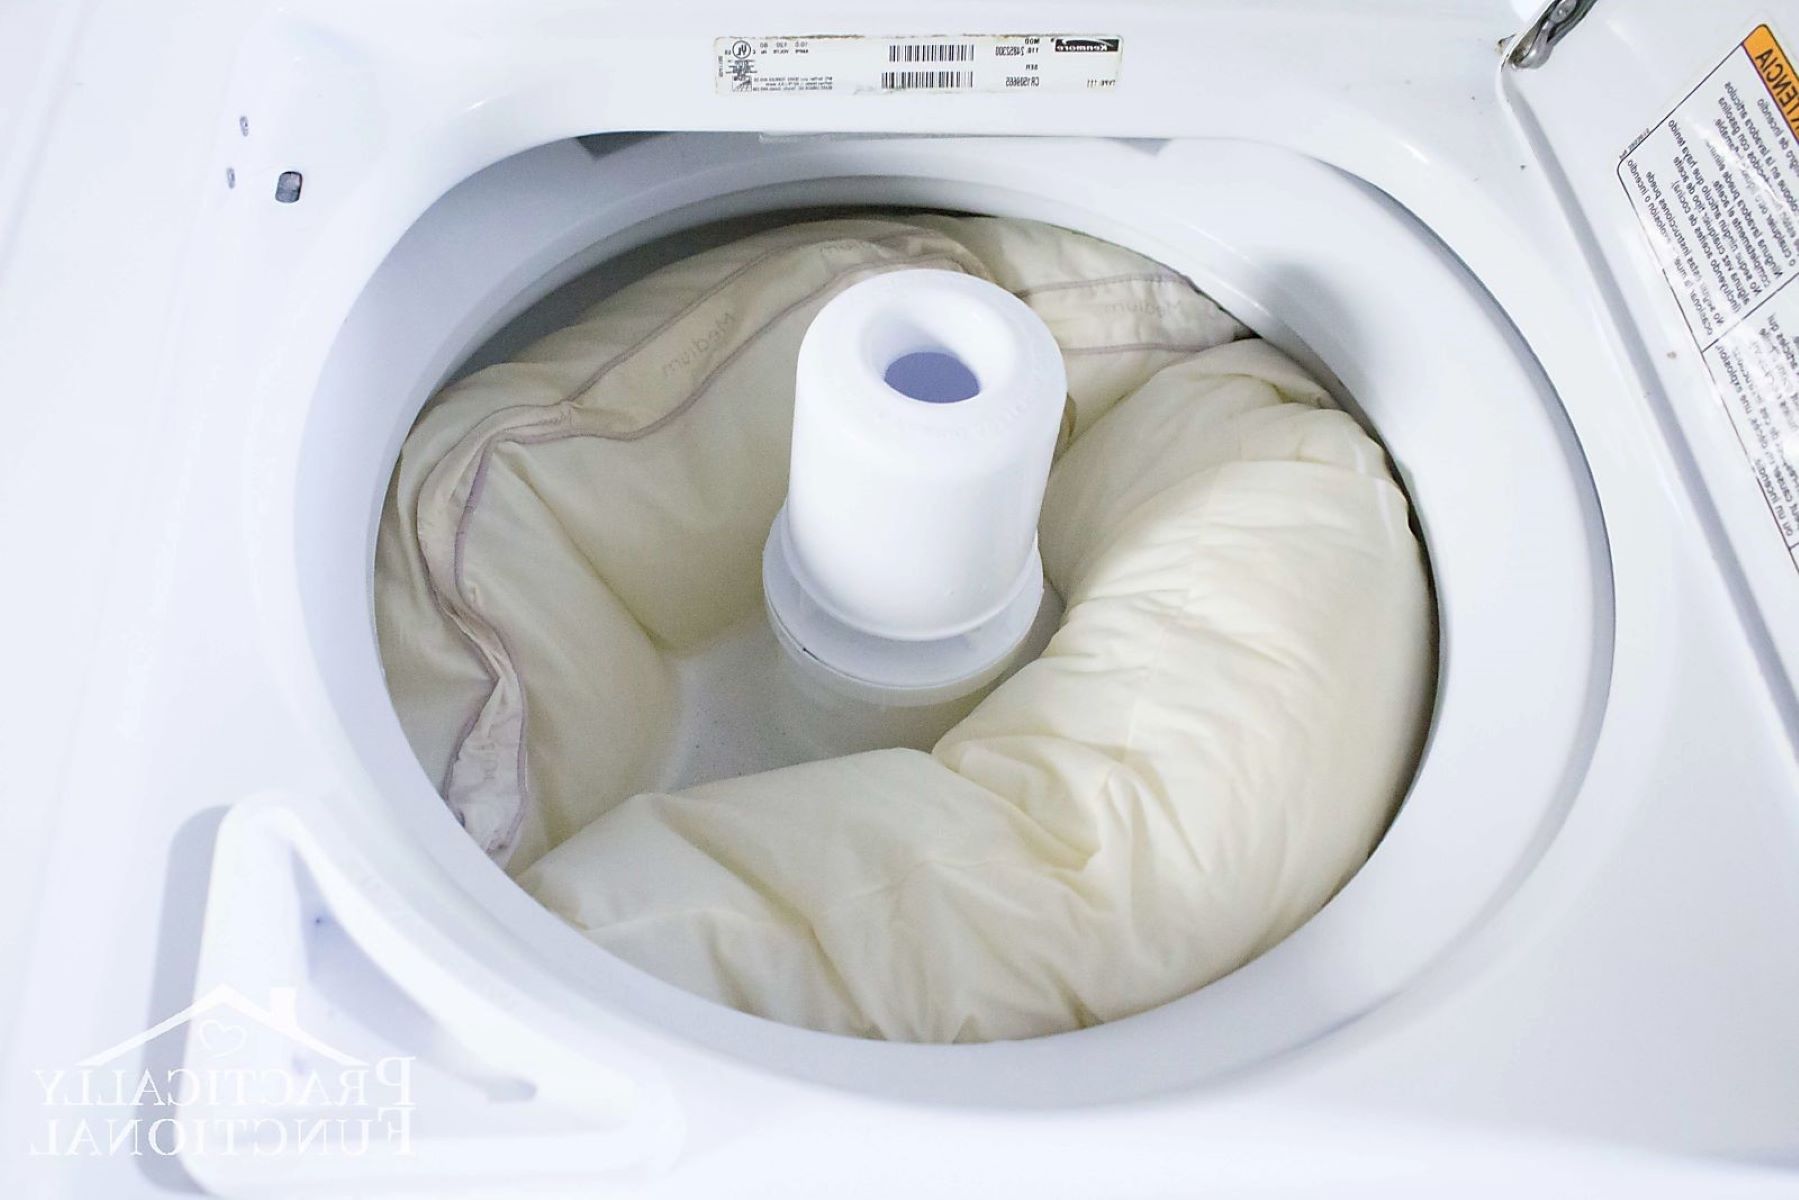 How To Bleach Pillows In A Washing Machine